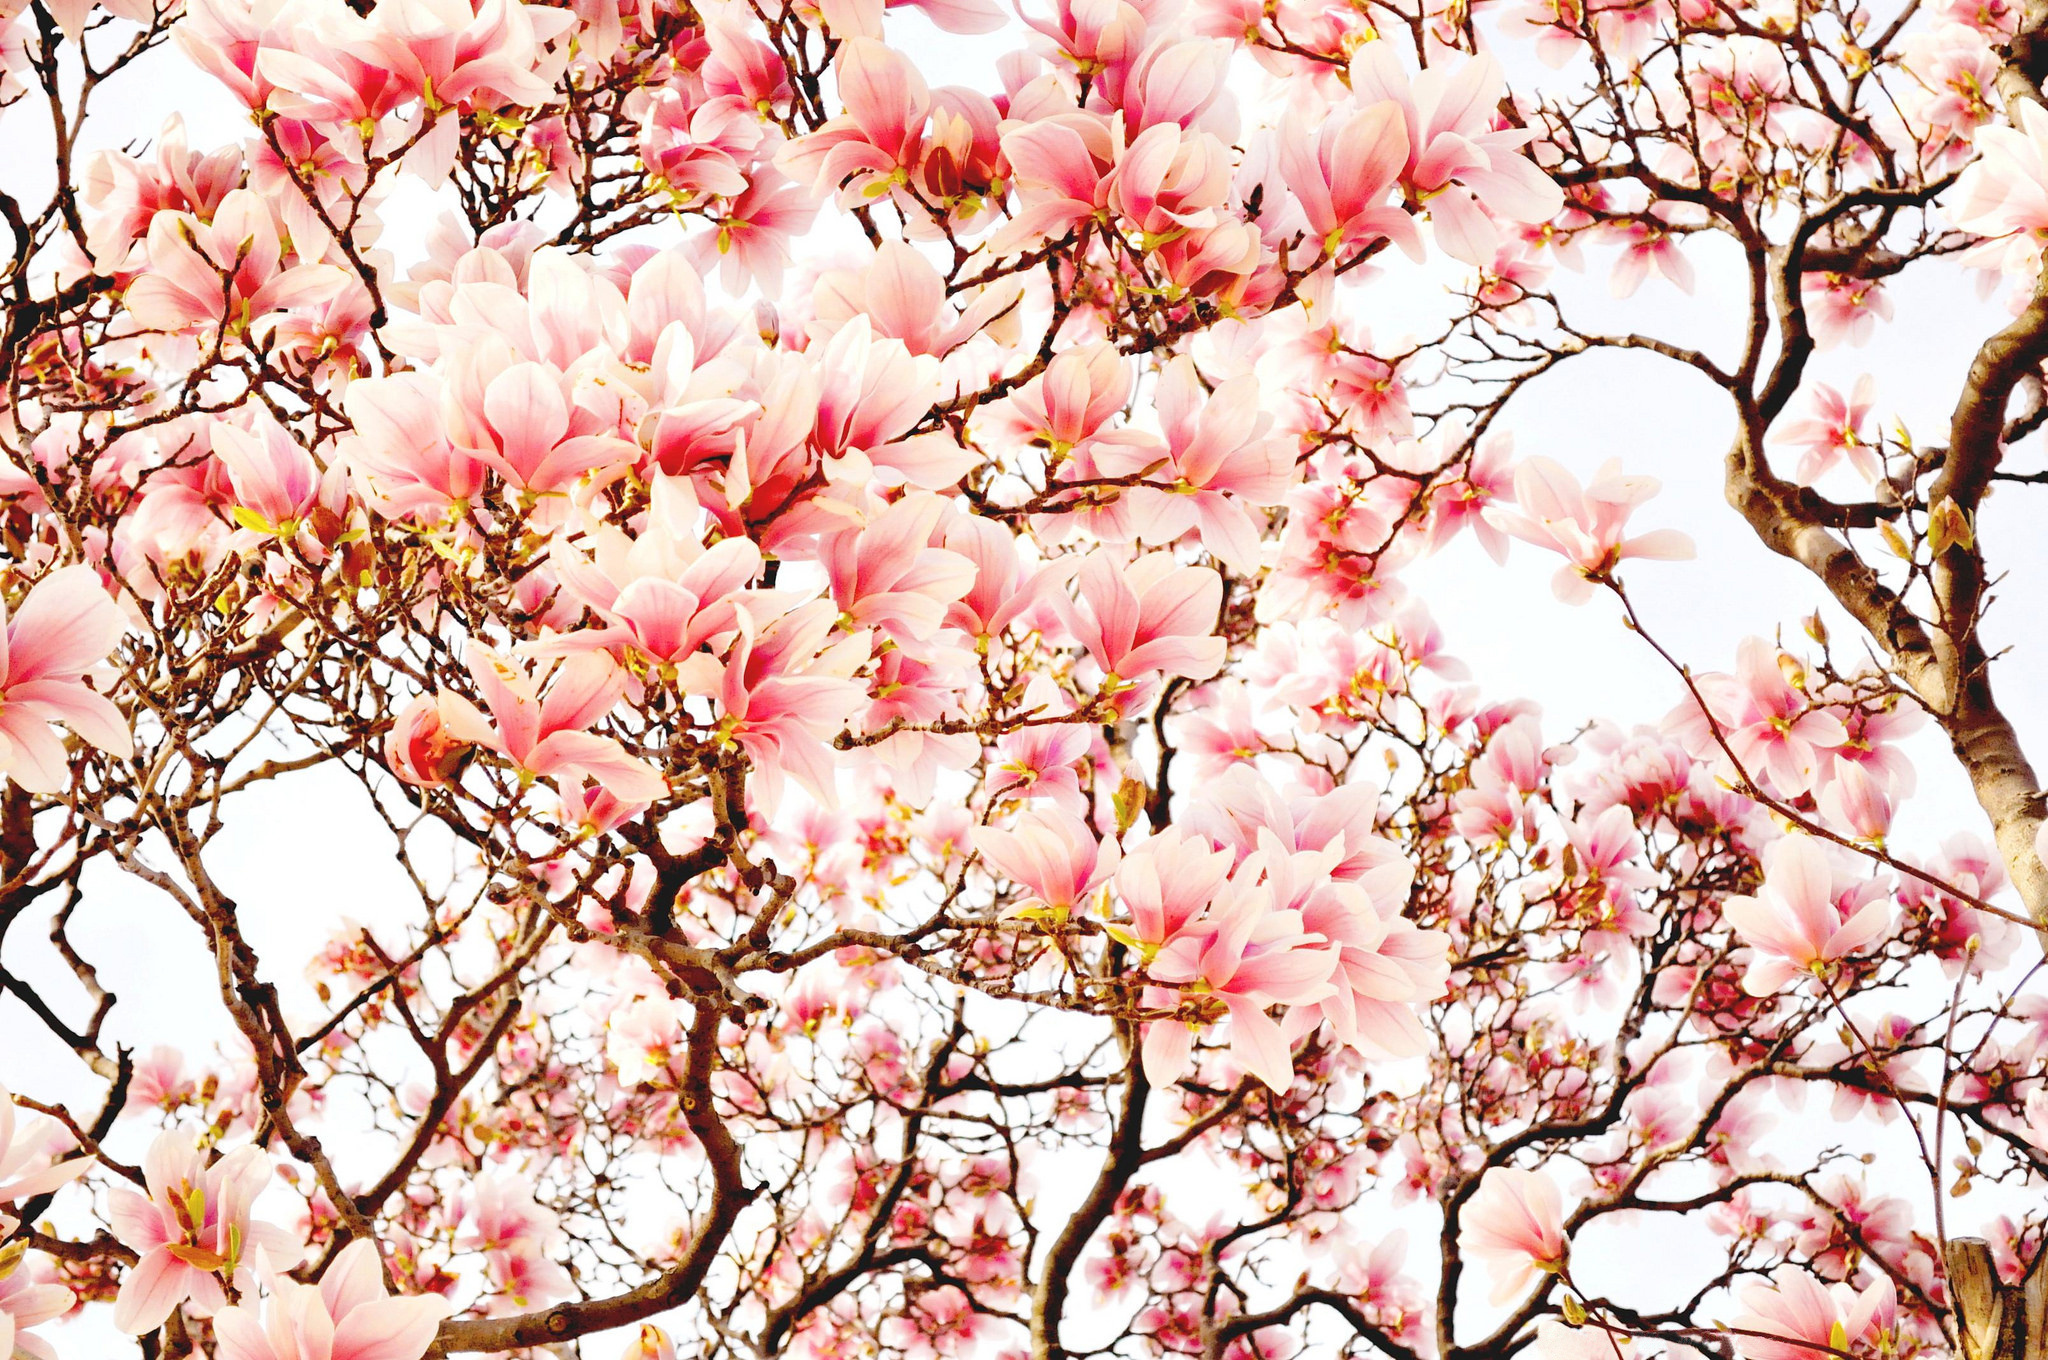 398384 descargar imagen tierra/naturaleza, magnolia, florecer, rama, flor rosa, árbol, árboles: fondos de pantalla y protectores de pantalla gratis